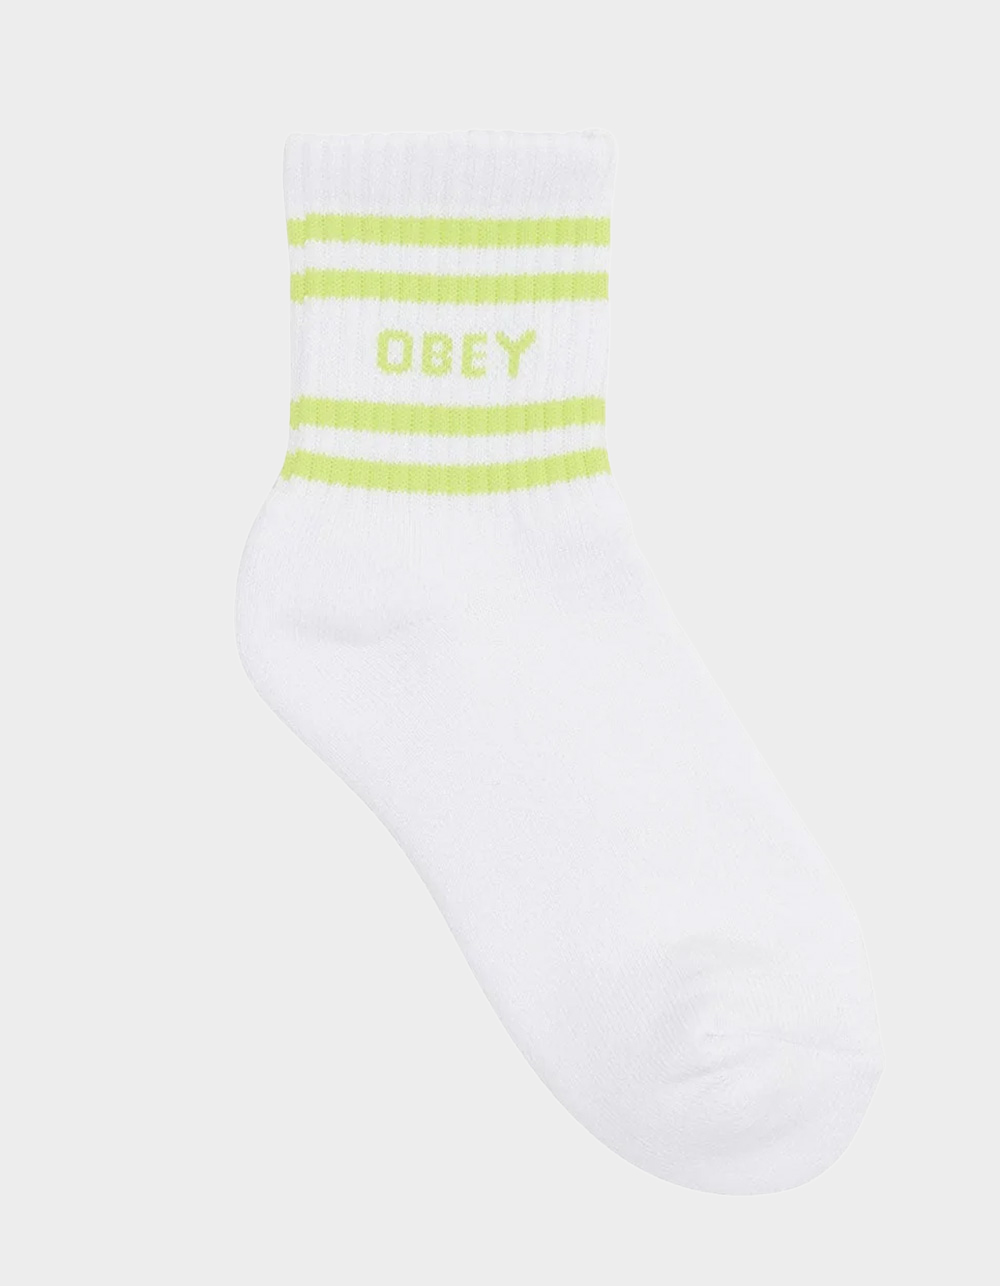 OBEY Coop Womens Crew Socks